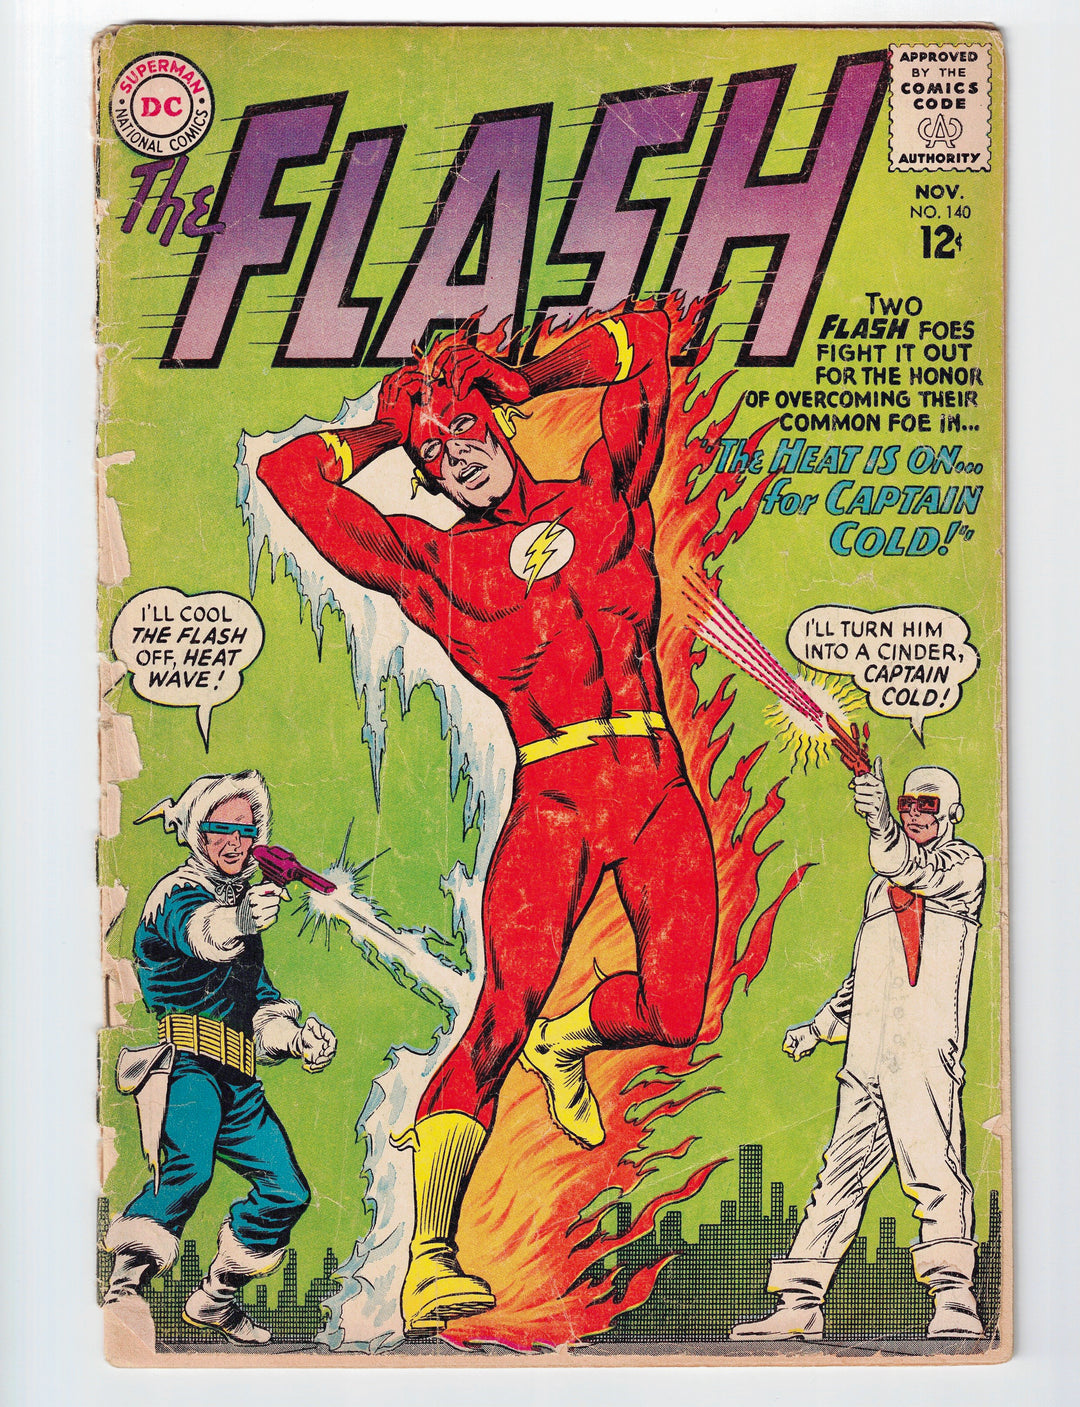 The Flash #140